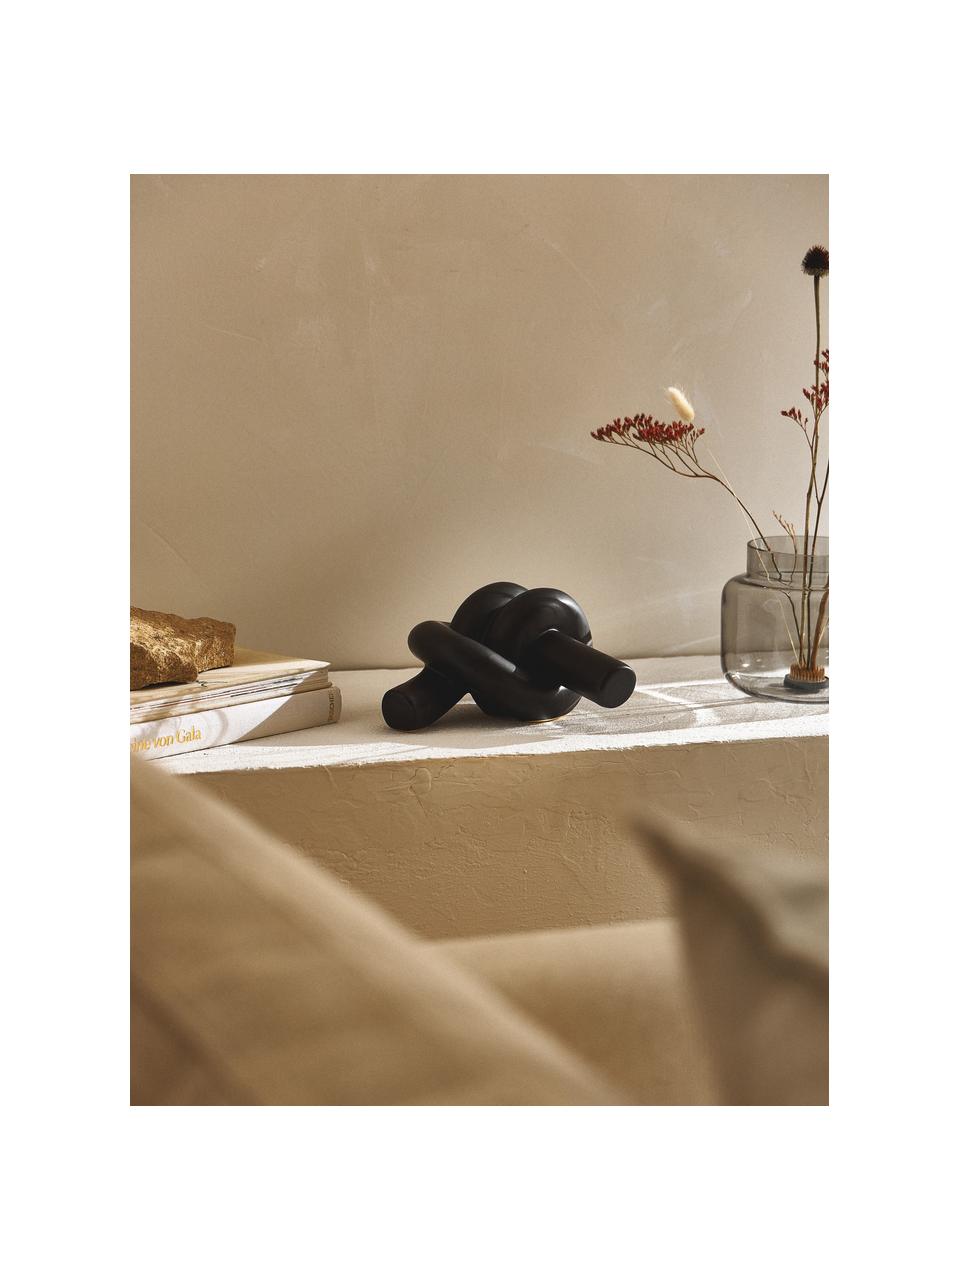 Objet décoratif artisanal Nodo, Grès cérame, Noir, larg. 23 x haut. 12 cm